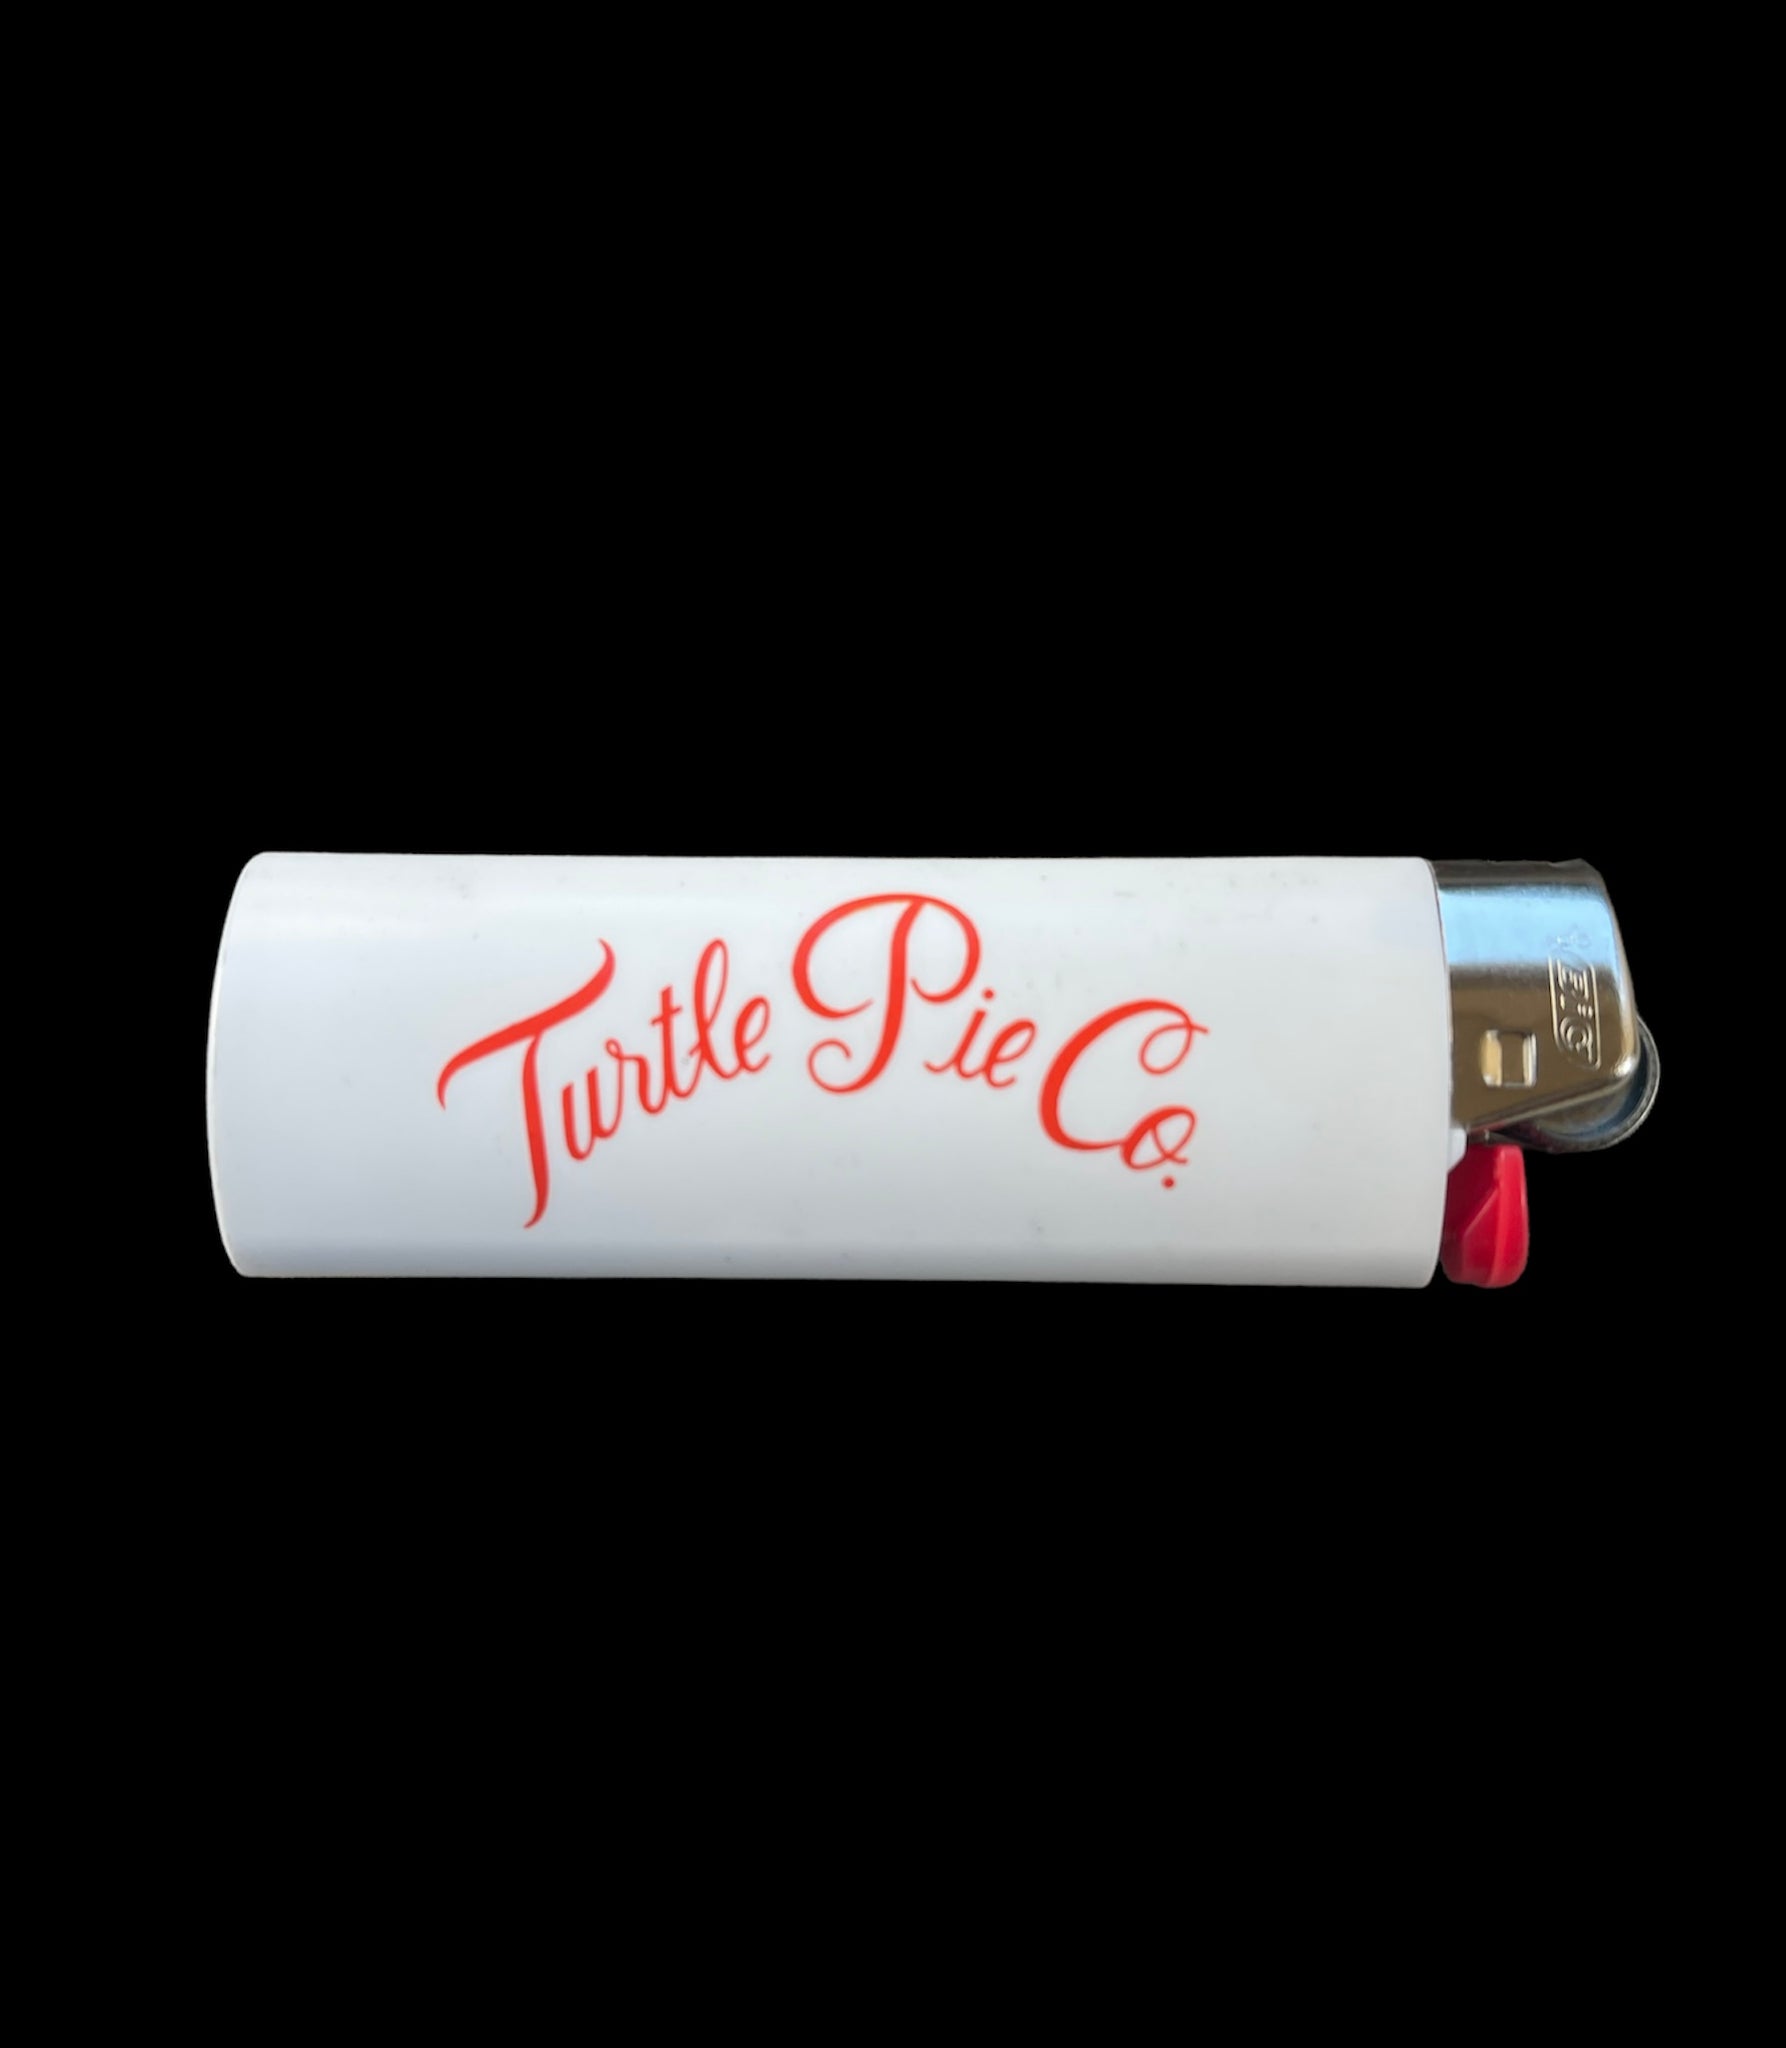 Turtle Pie Co Lighter